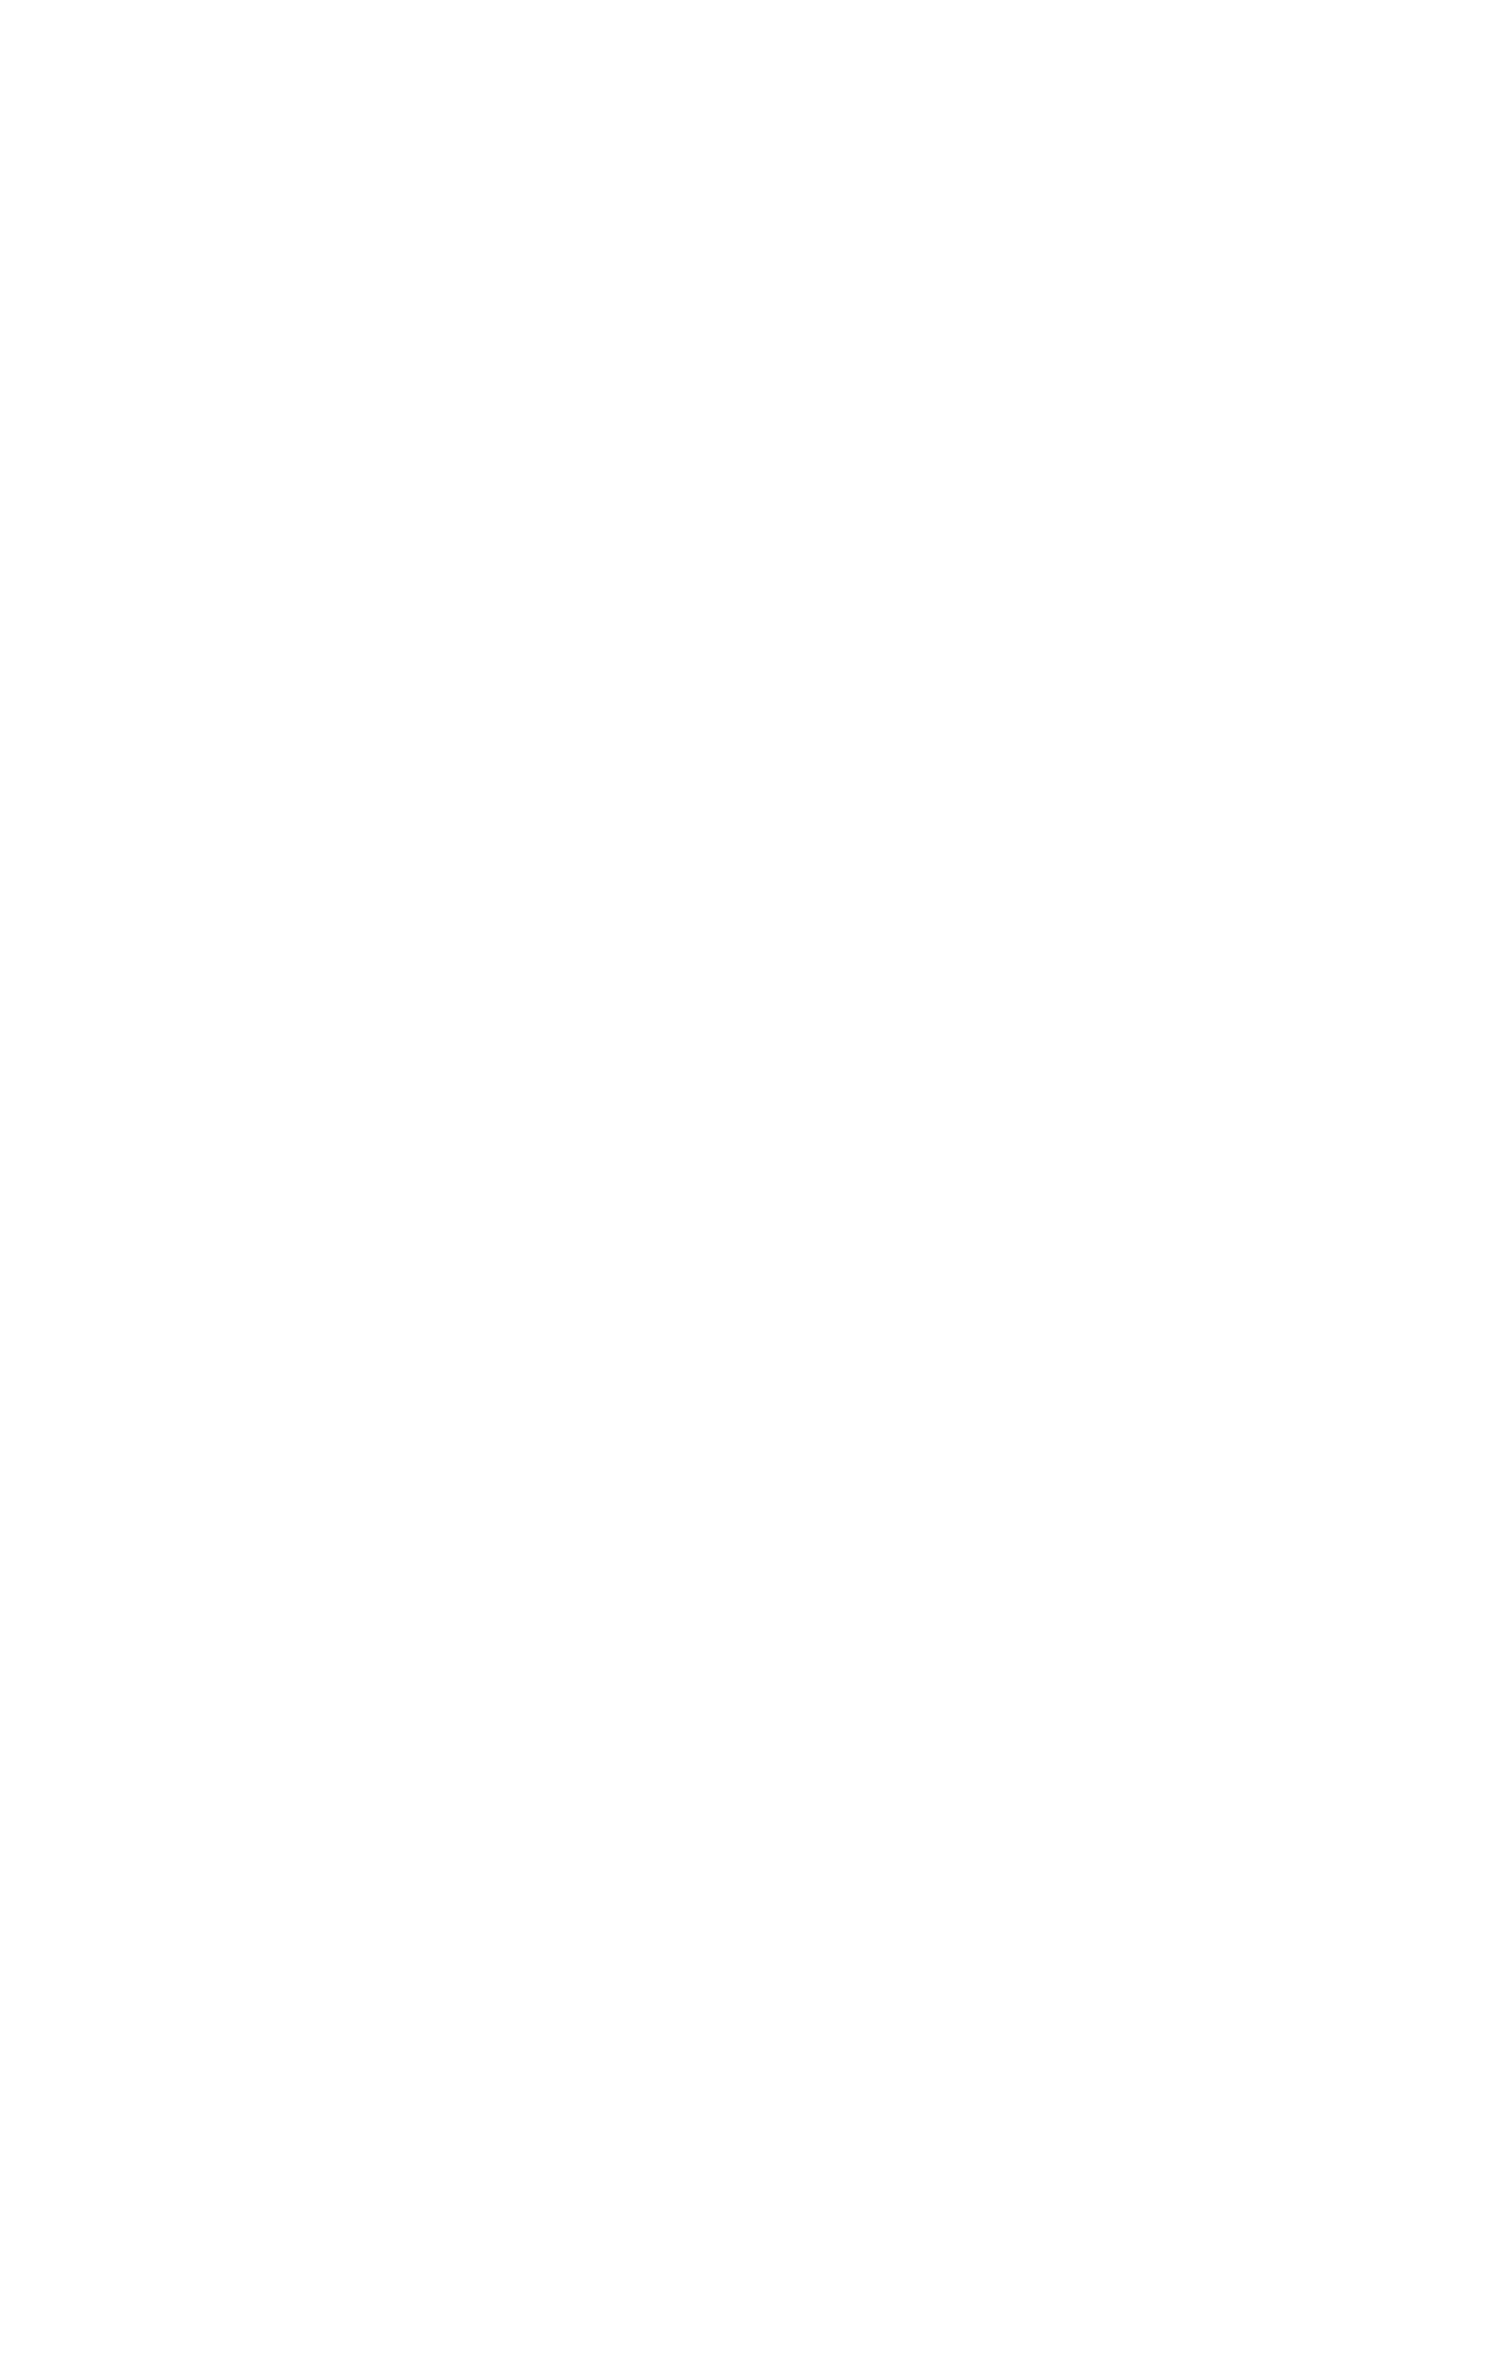 Park Slope Rock School